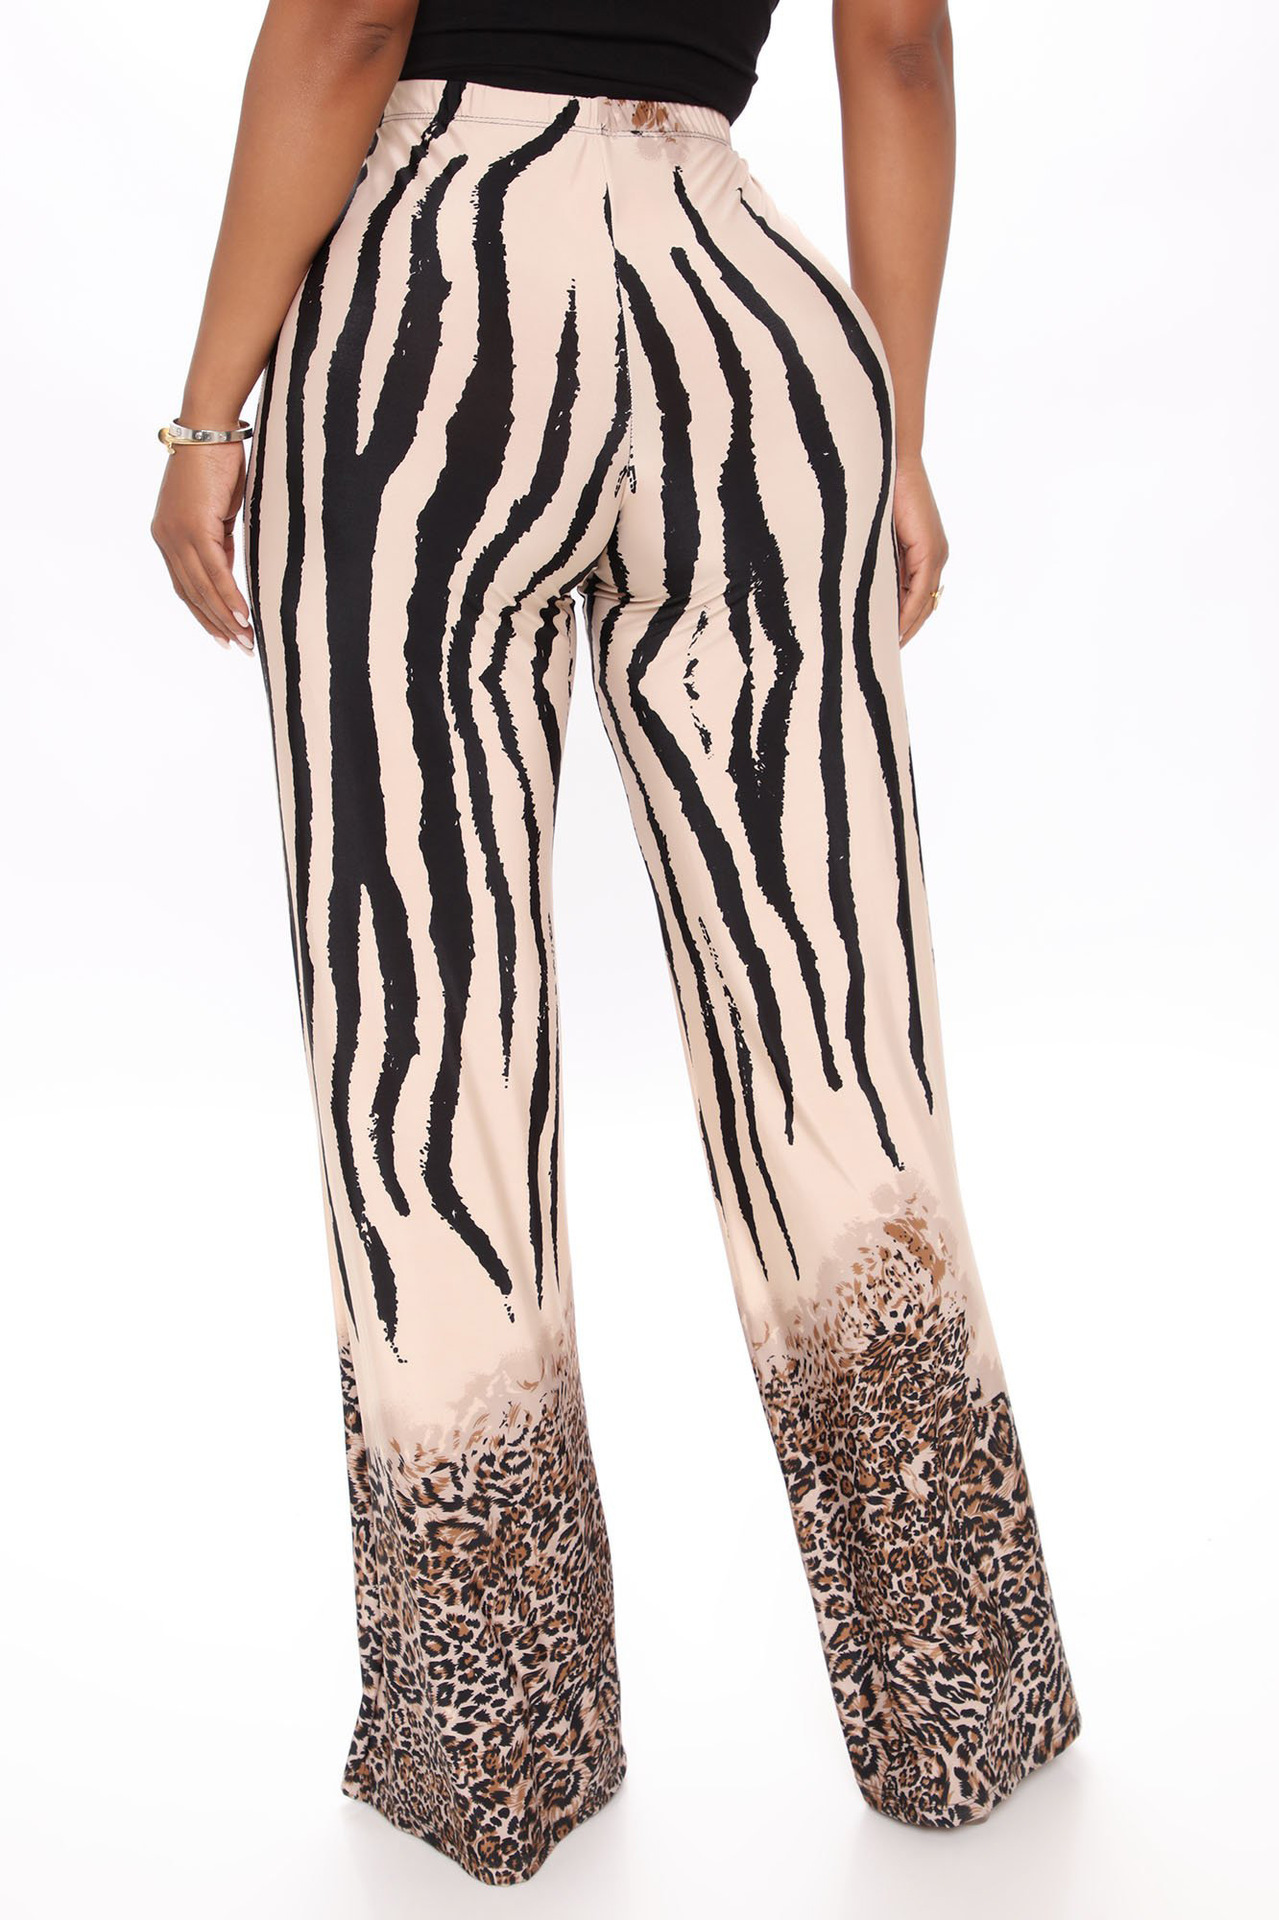 Unlimon 2021 Hot Selling Personalized Fashion Zebra Print High Waist Wide Leg Pants D01516